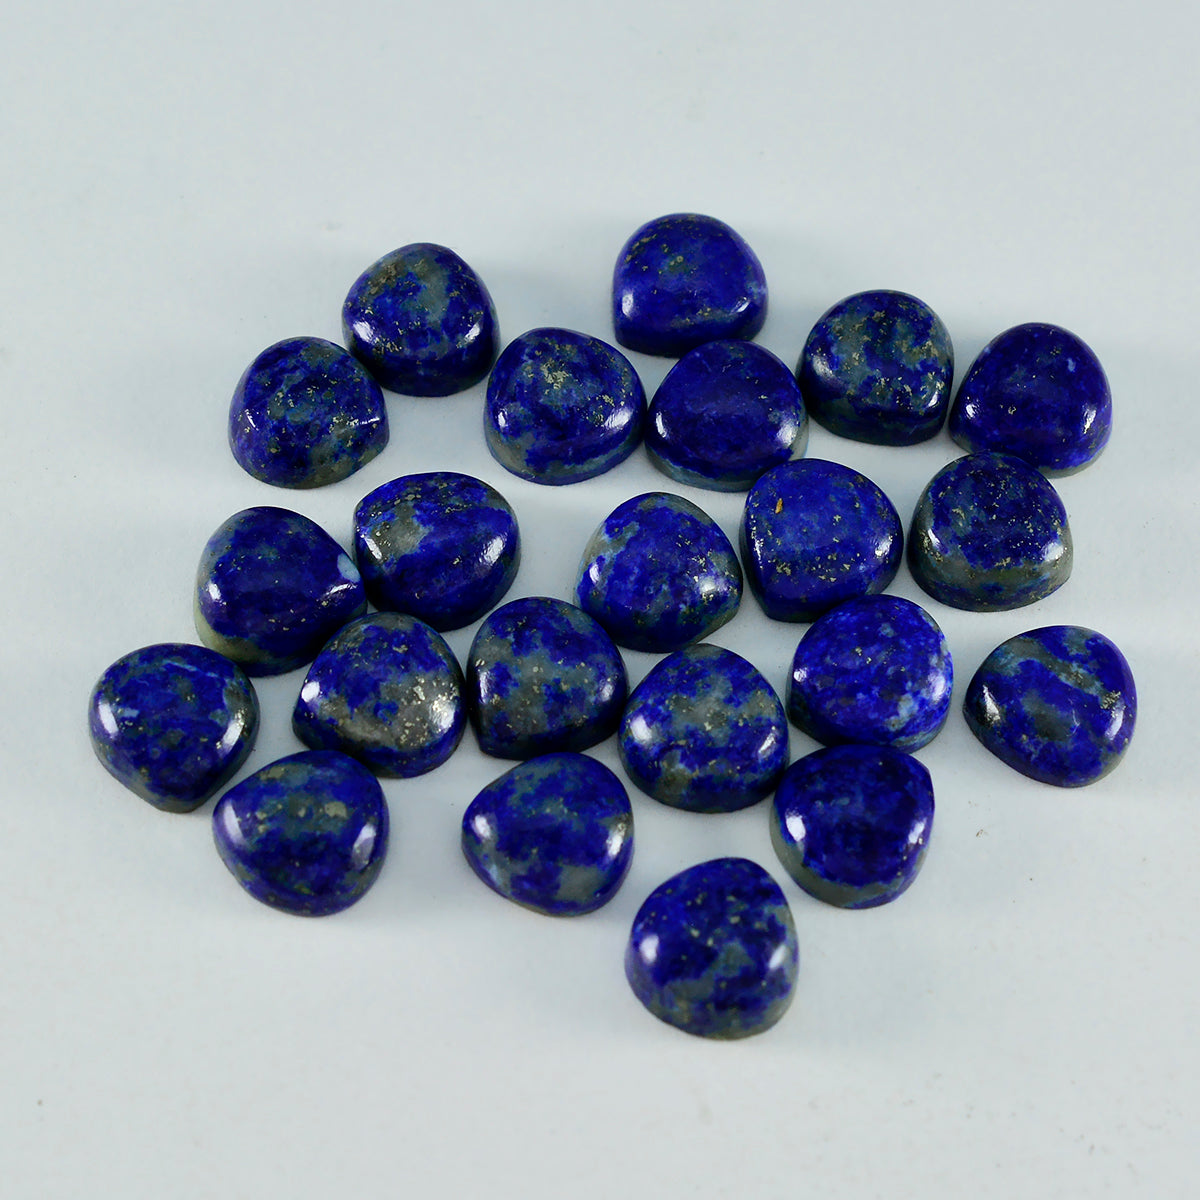 Riyogems 1PC Blue Lapis Lazuli Cabochon 6x6 mm Heart Shape AAA Quality Loose Gems